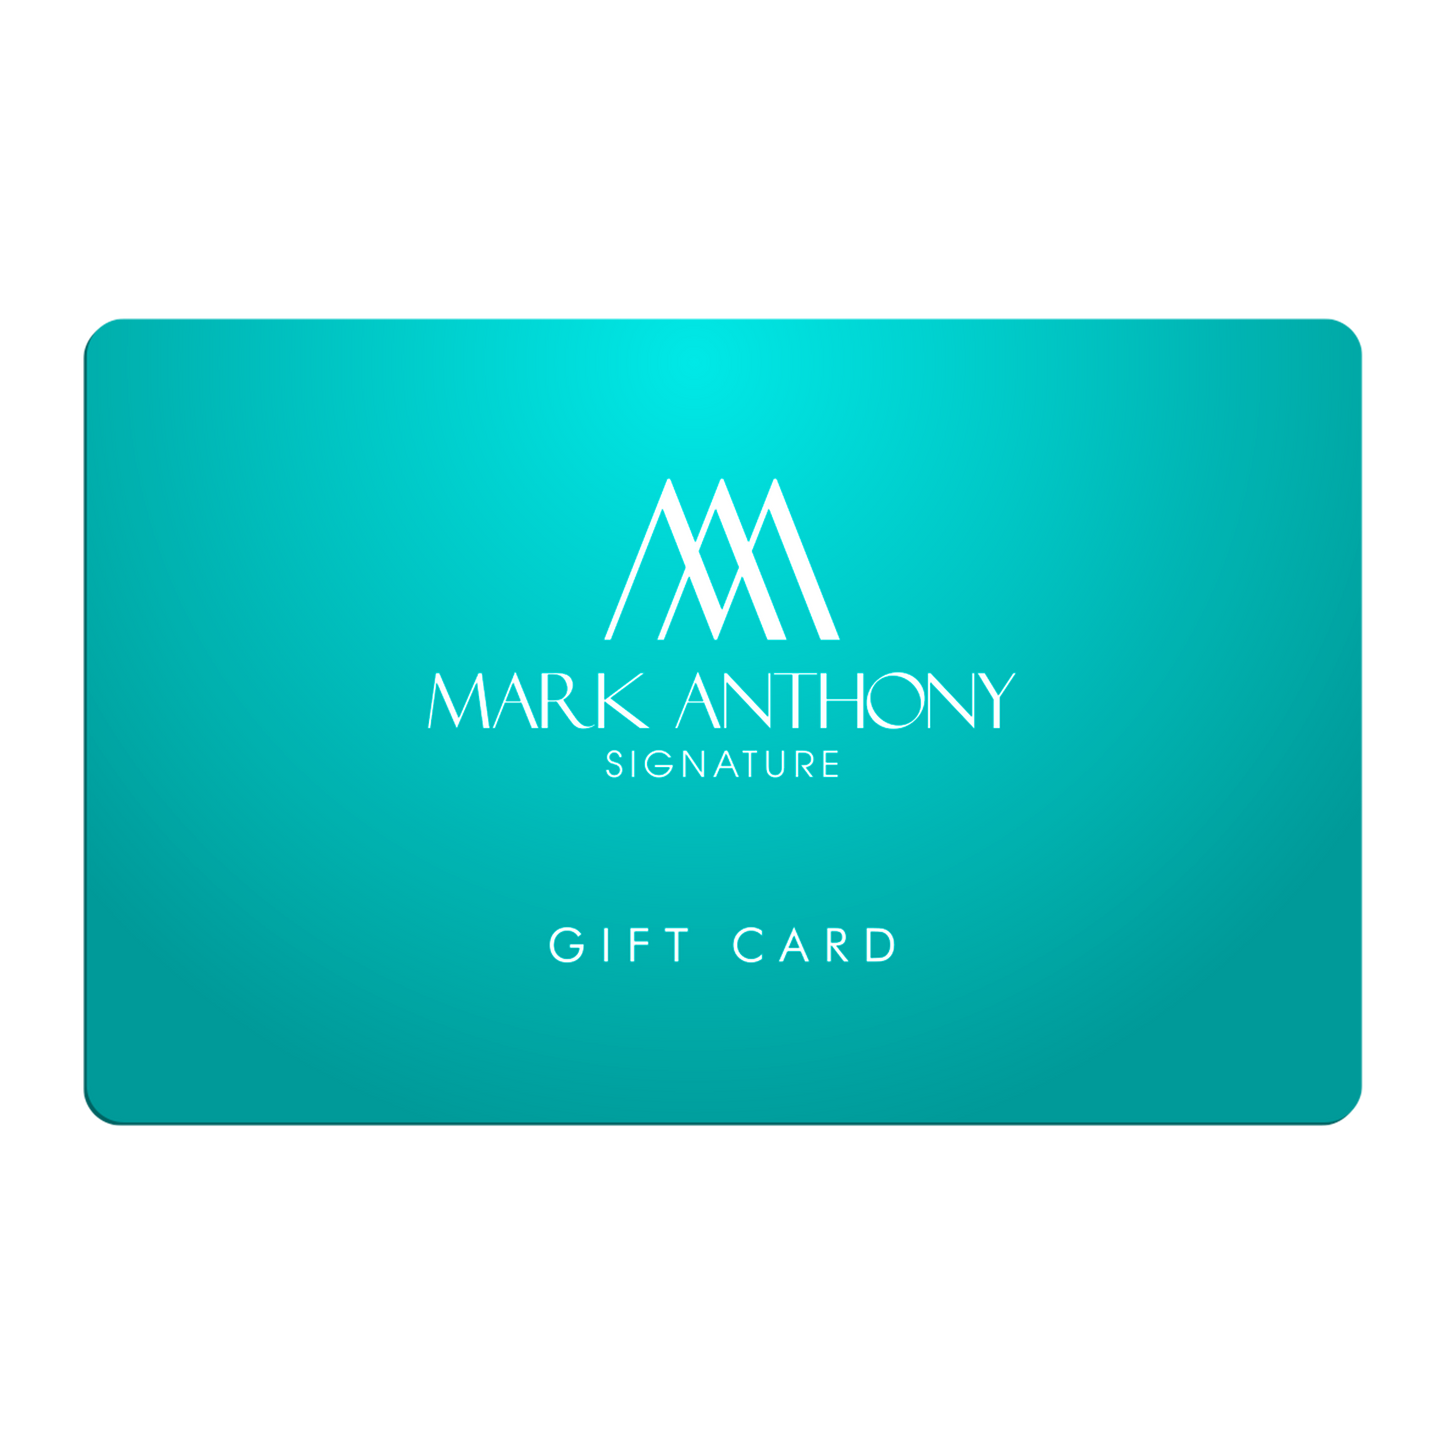 The Mark Anthony Signature Gift Card